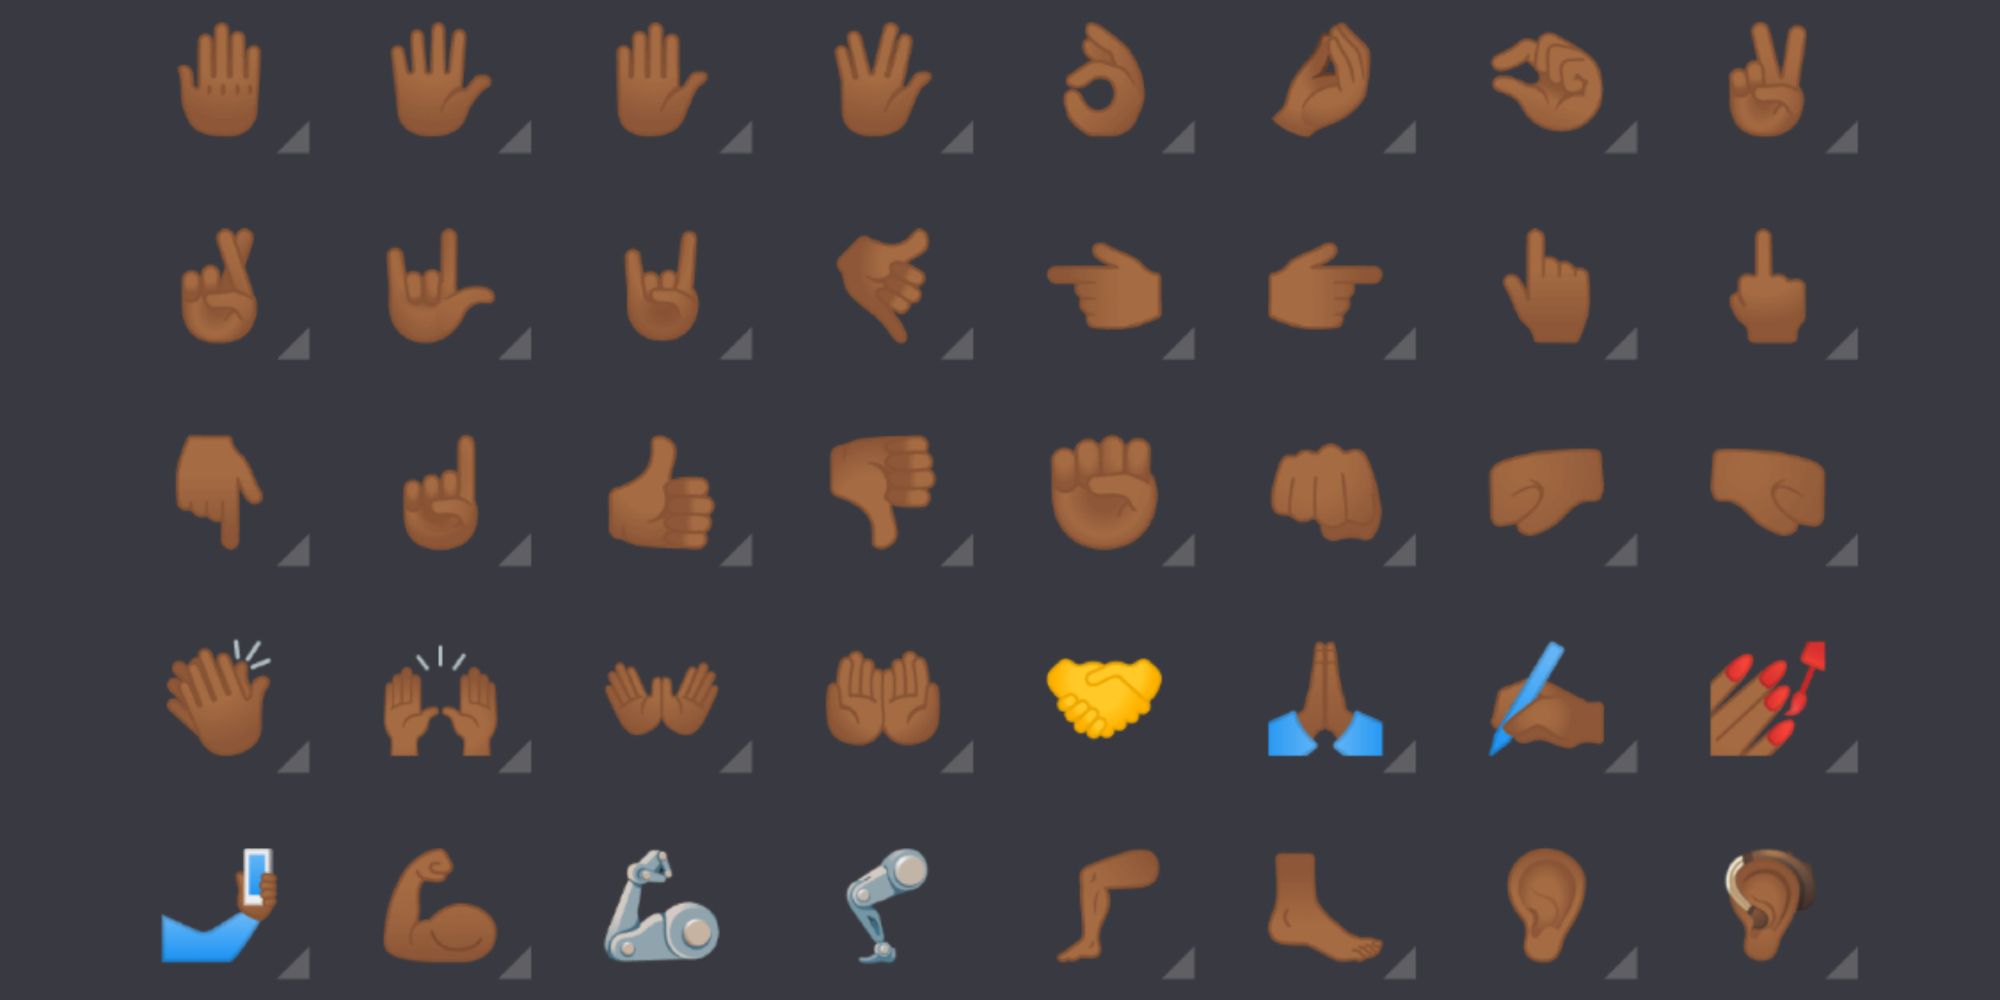 Skin tone options for emojis but not the handshake emoji